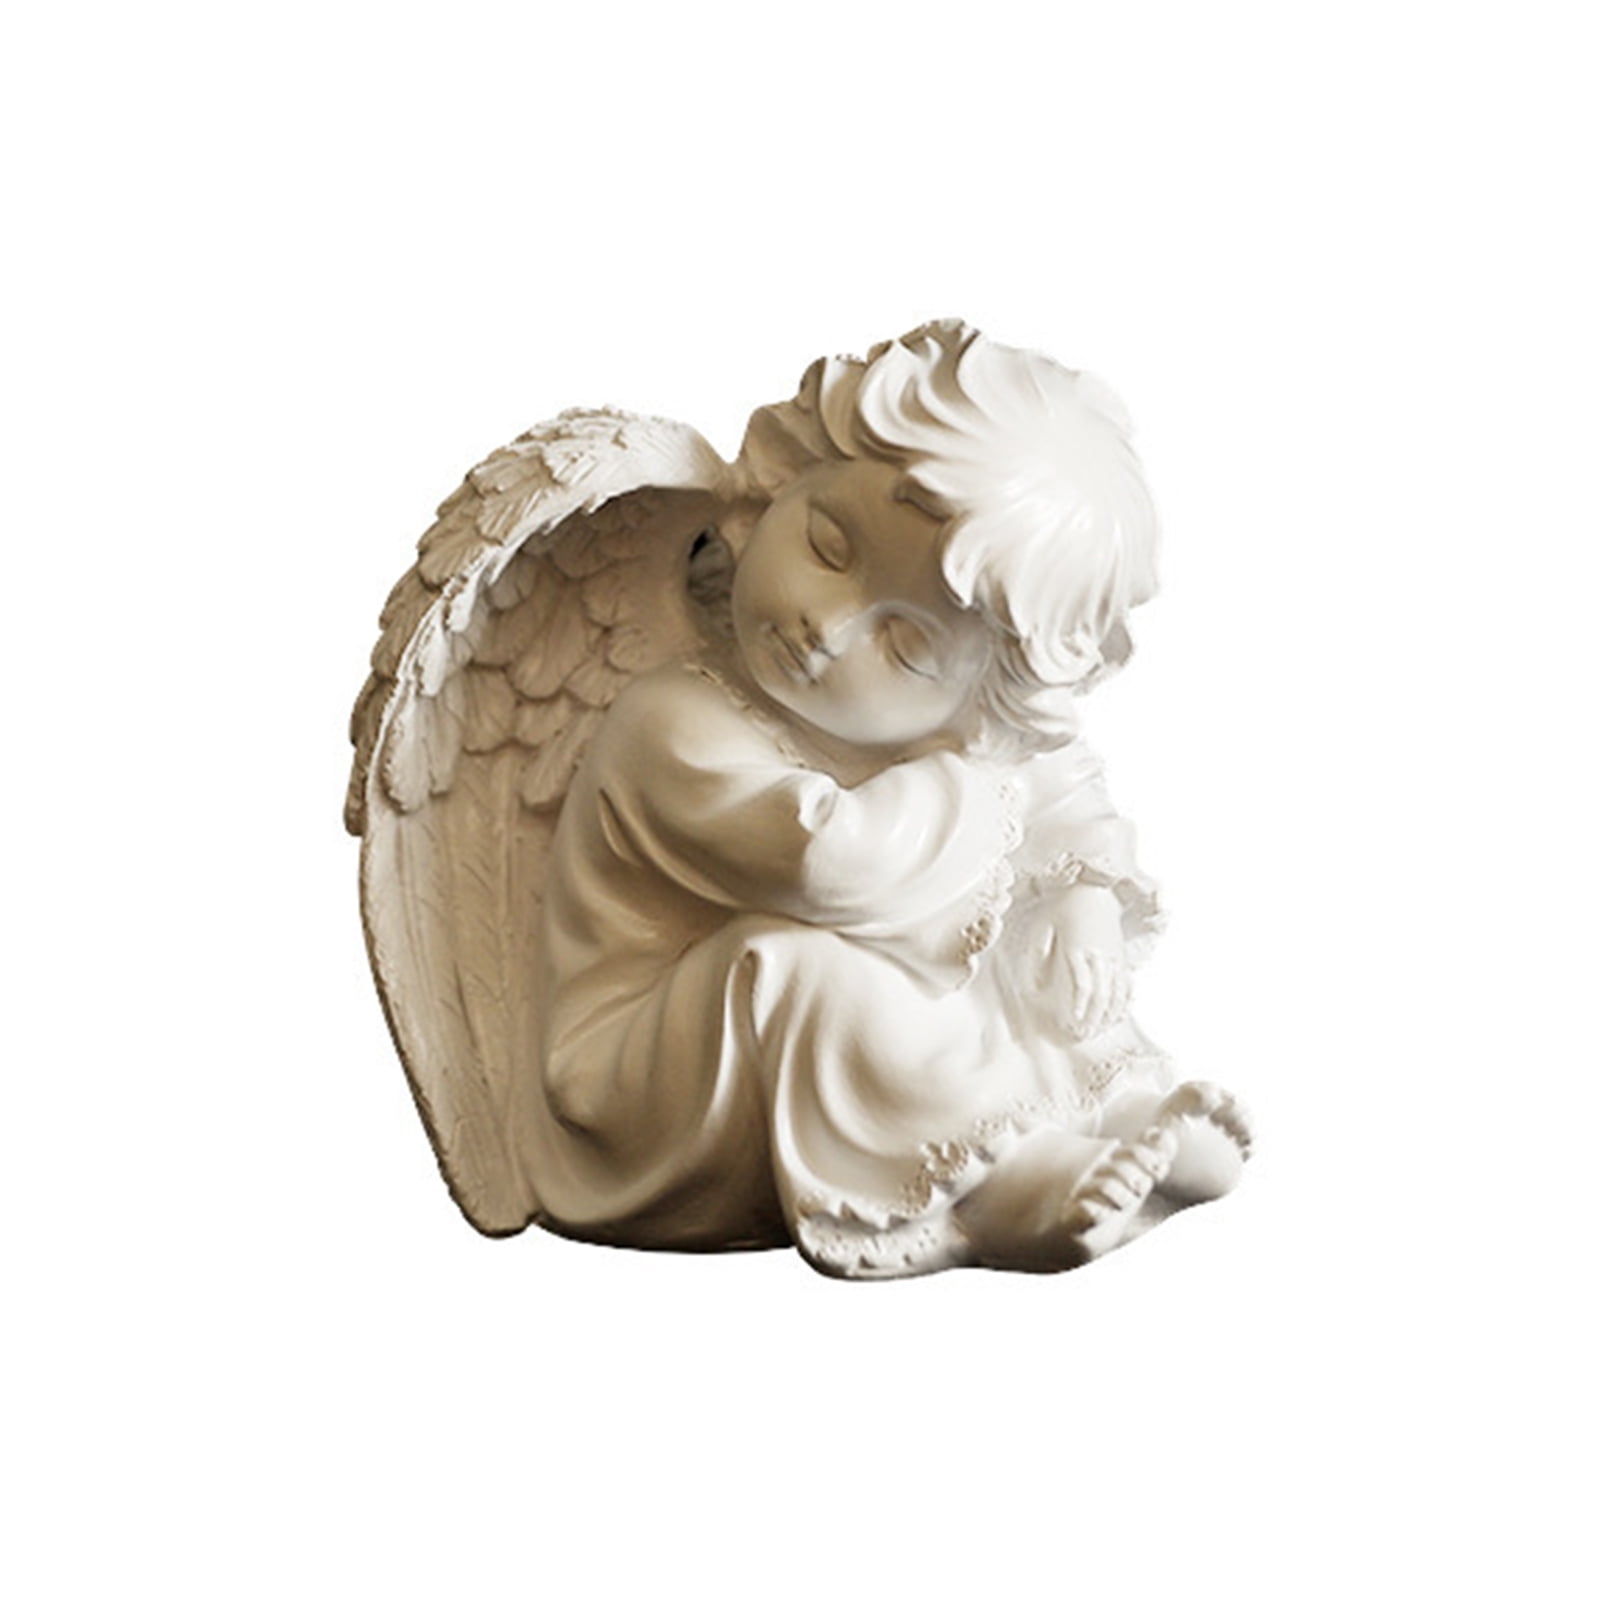 Large Pair Of CHERUB IN WINGS BABY ANGEL Ornaments Figurine Statue Memorial Gift 